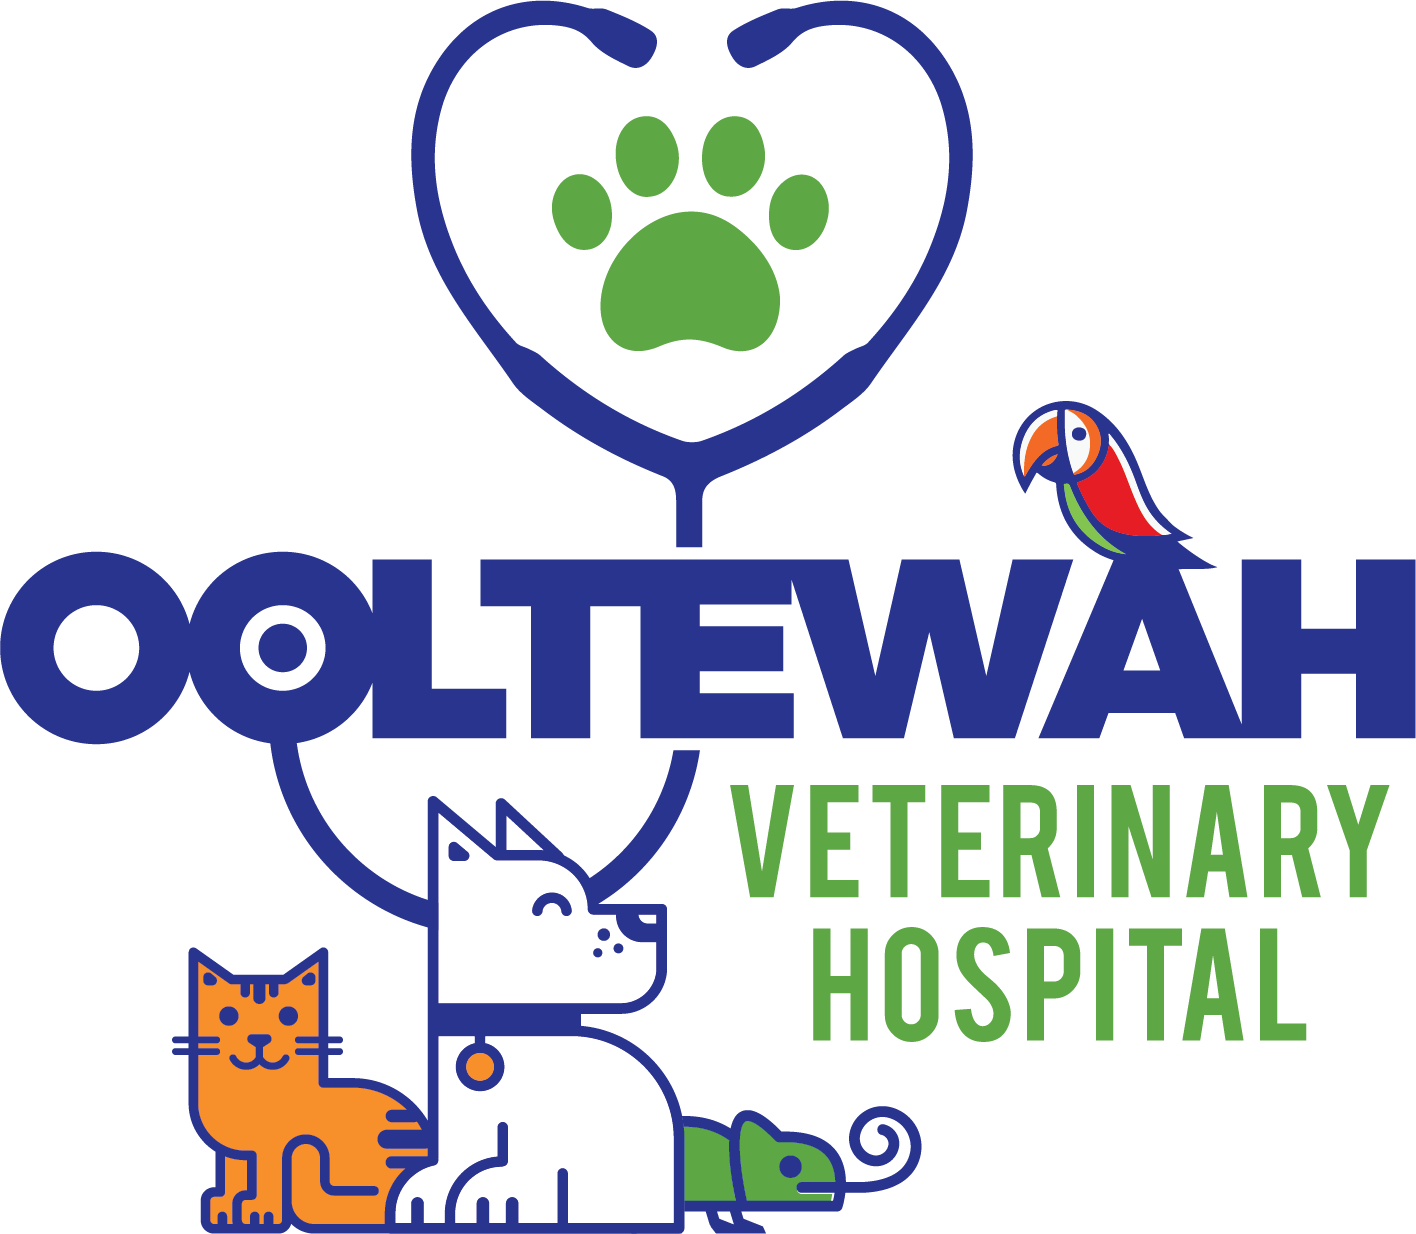 Ooltewah Veterinary Hospital Logo.png